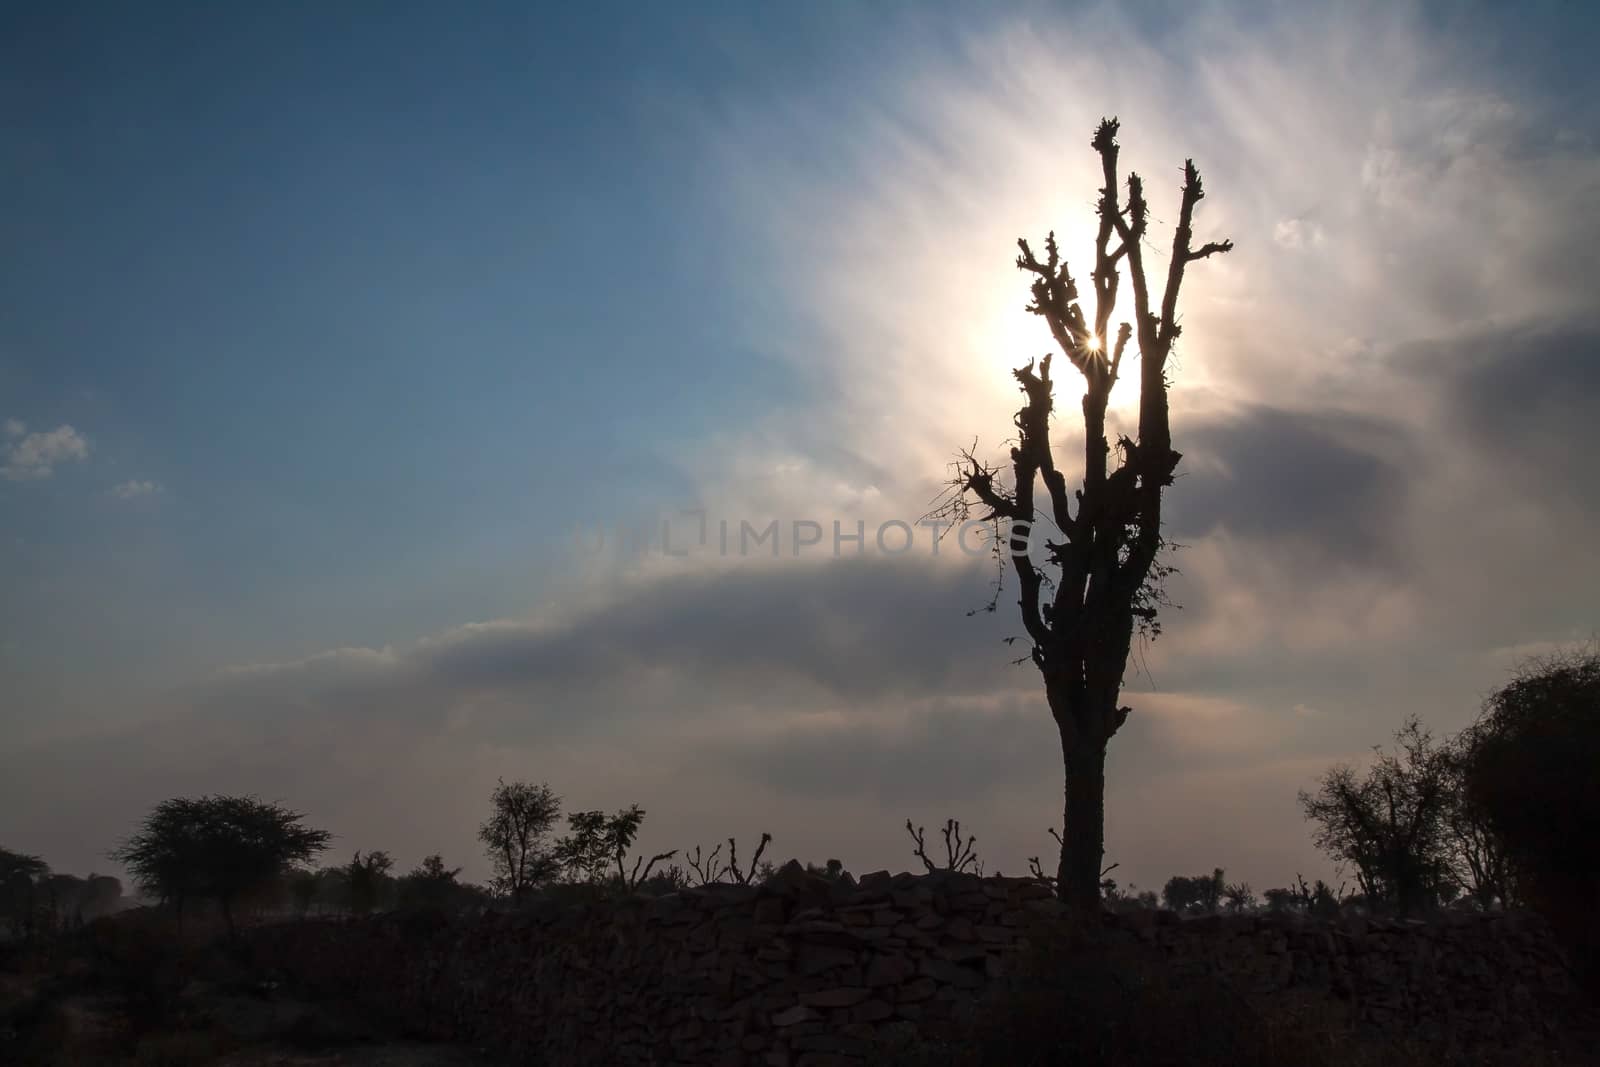 Starburst sunrays Barren Tree Silhouette Stone Hedge clouds Blue Sky by giddavr